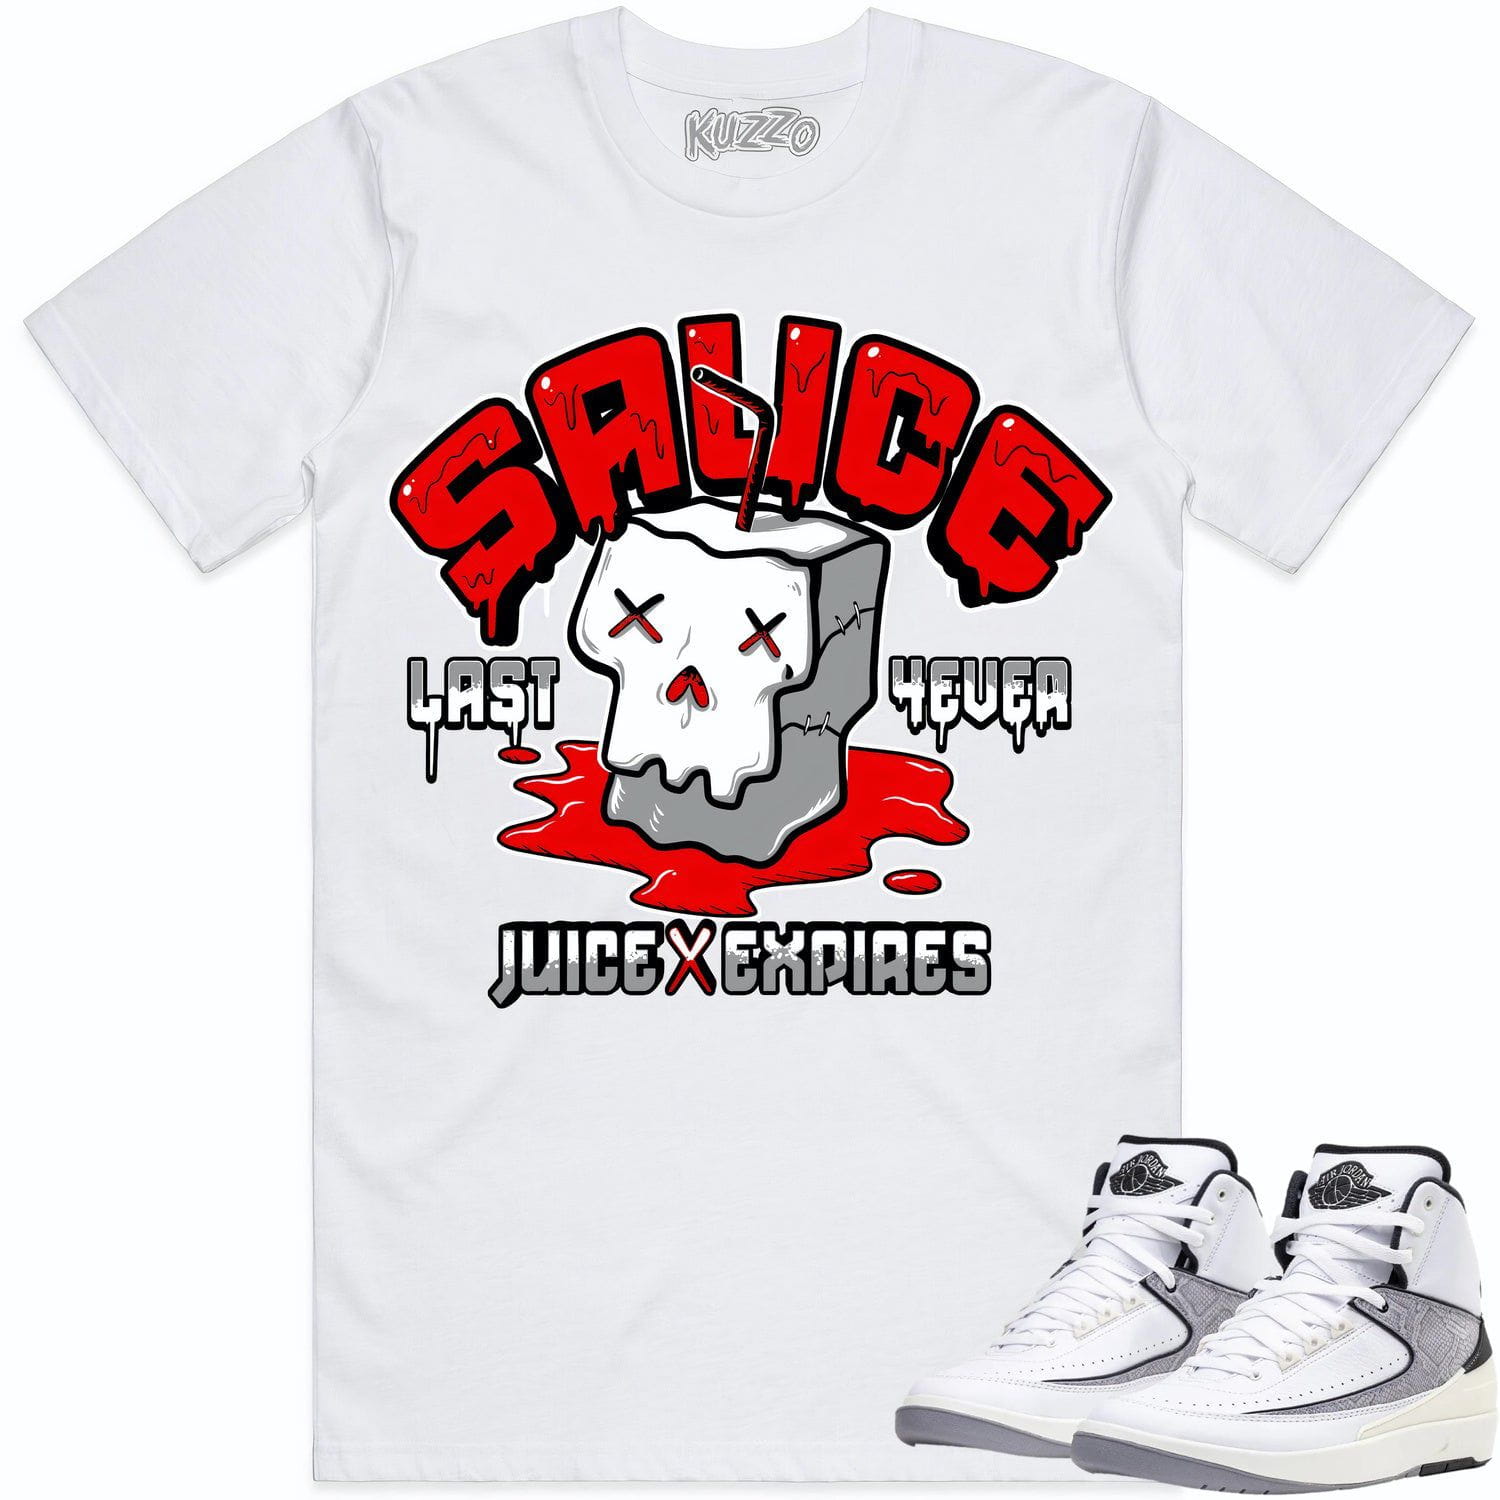 Python 2s Shirts - Jordan Retro 2 Python 2s Sneaker Tees - Sauce